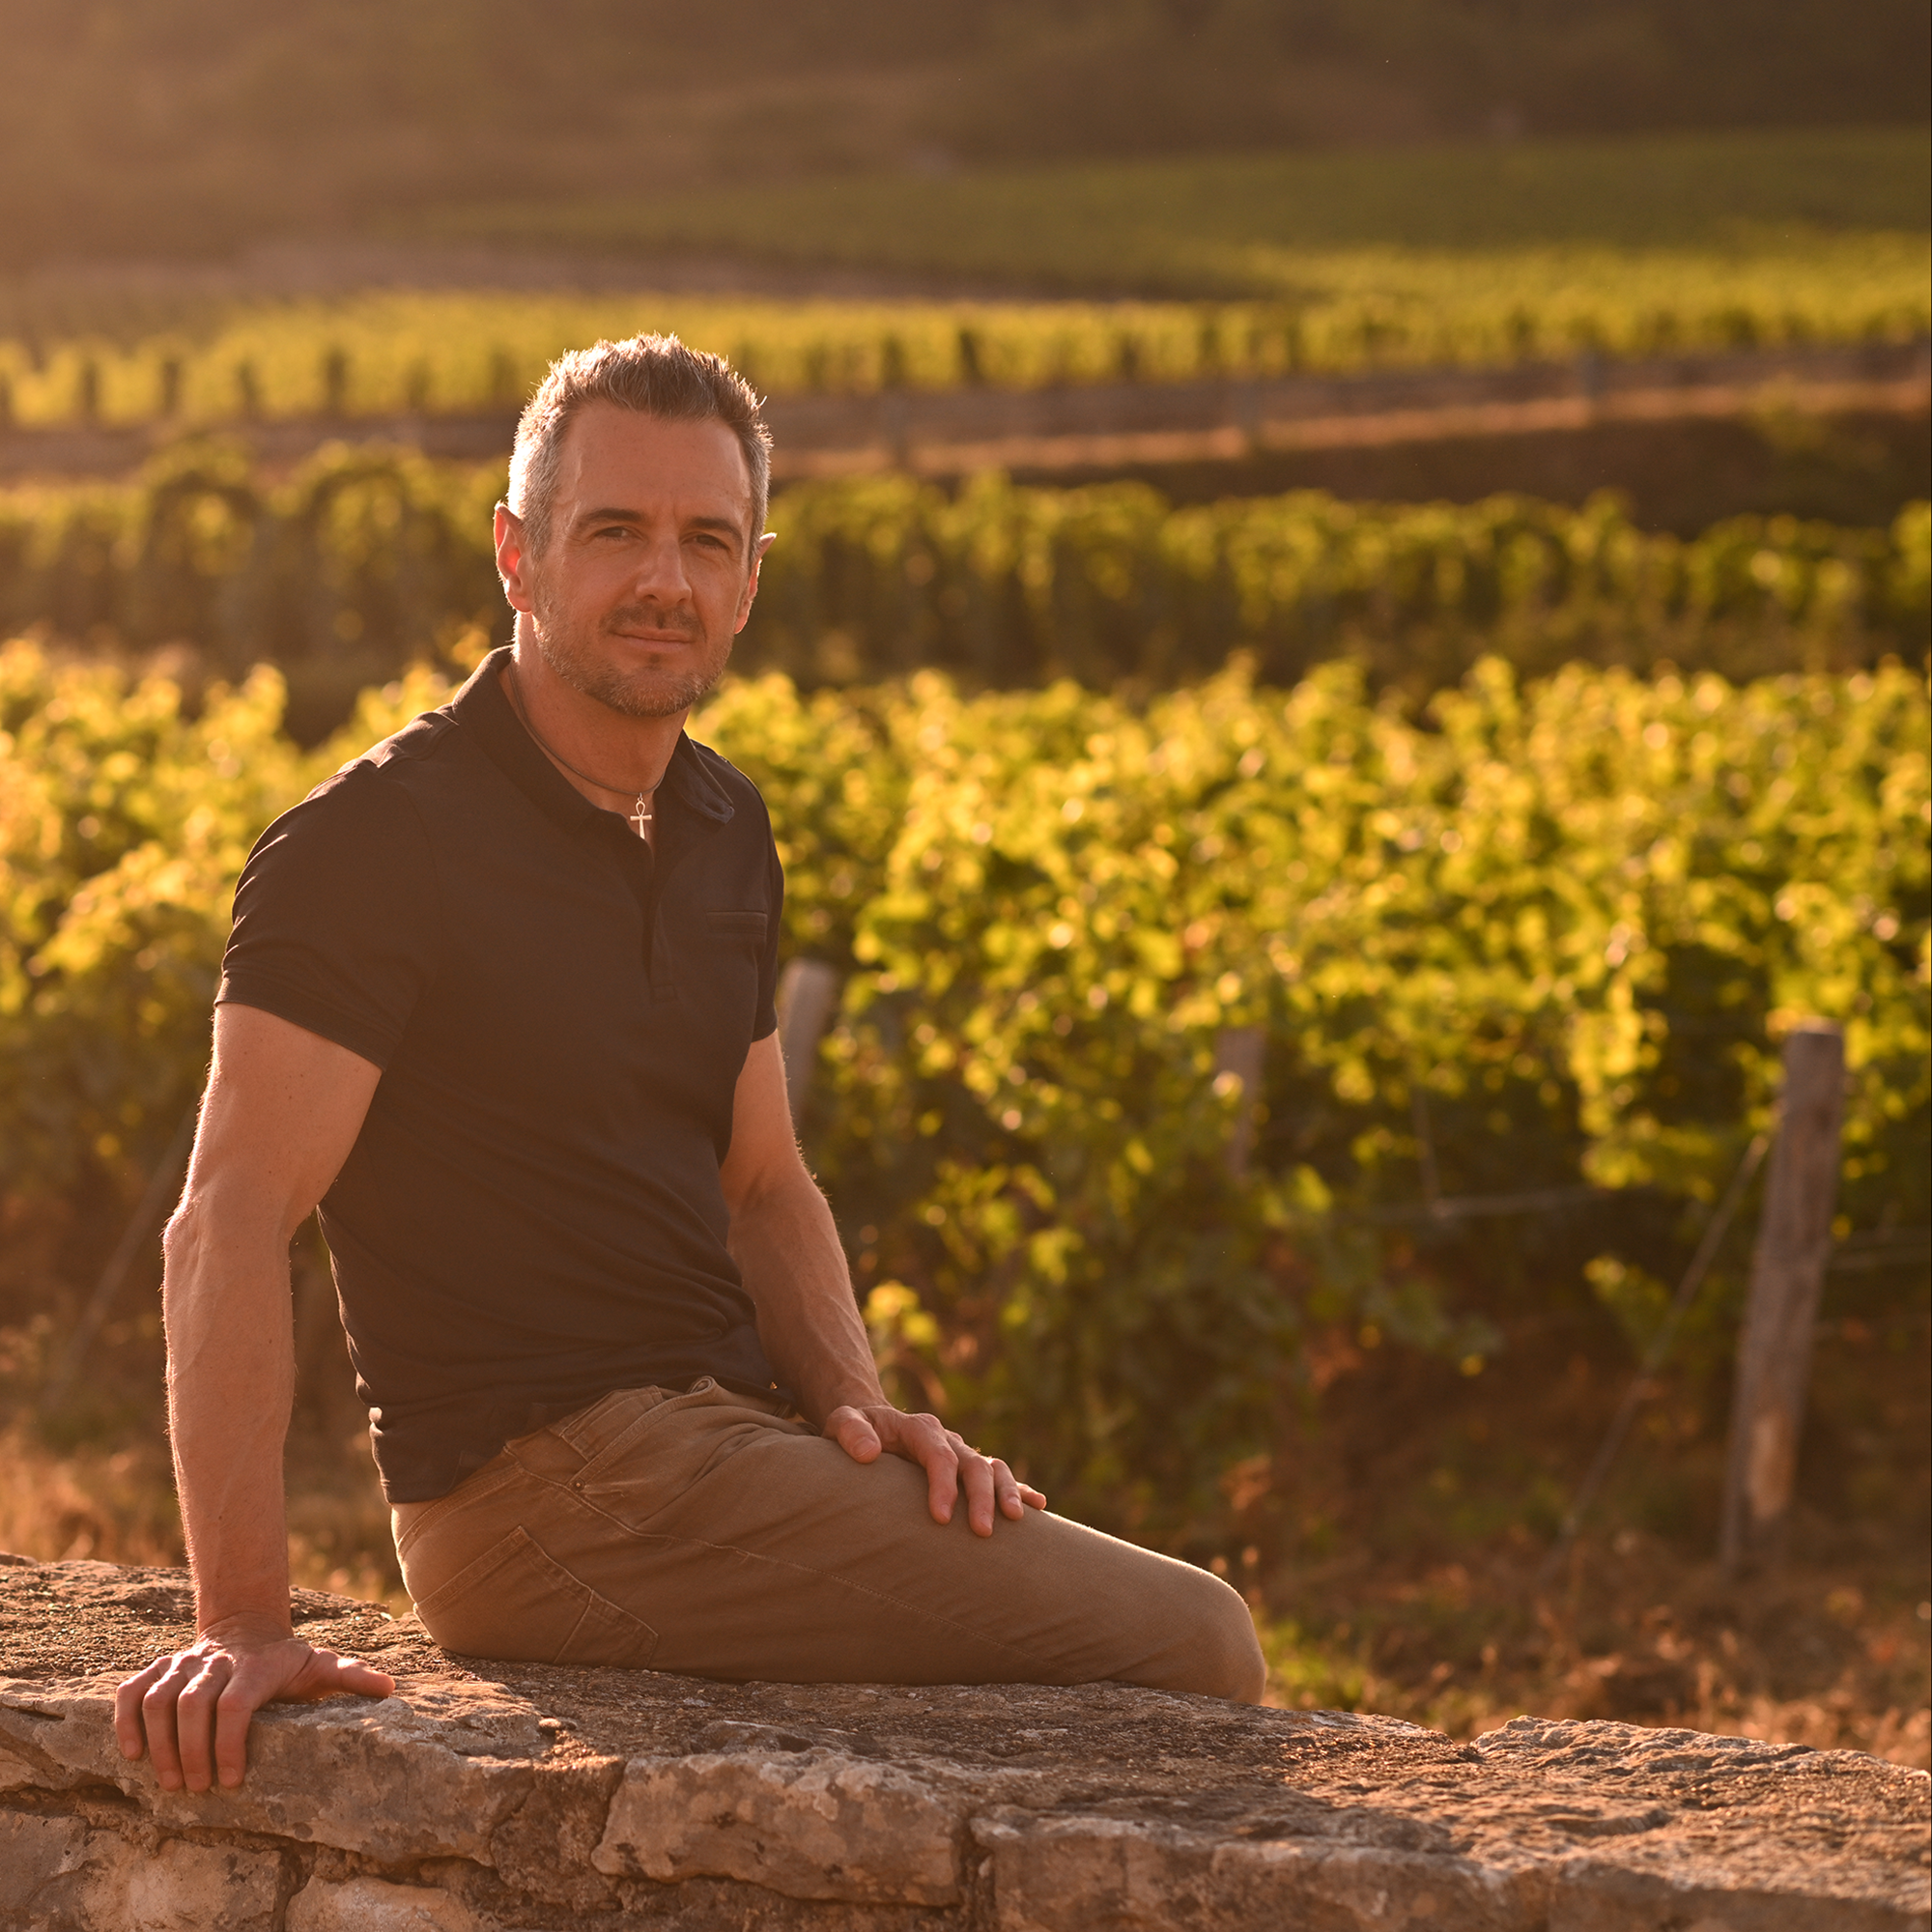 edouard damidot fondateur vinesime dans les vignes bourgogne